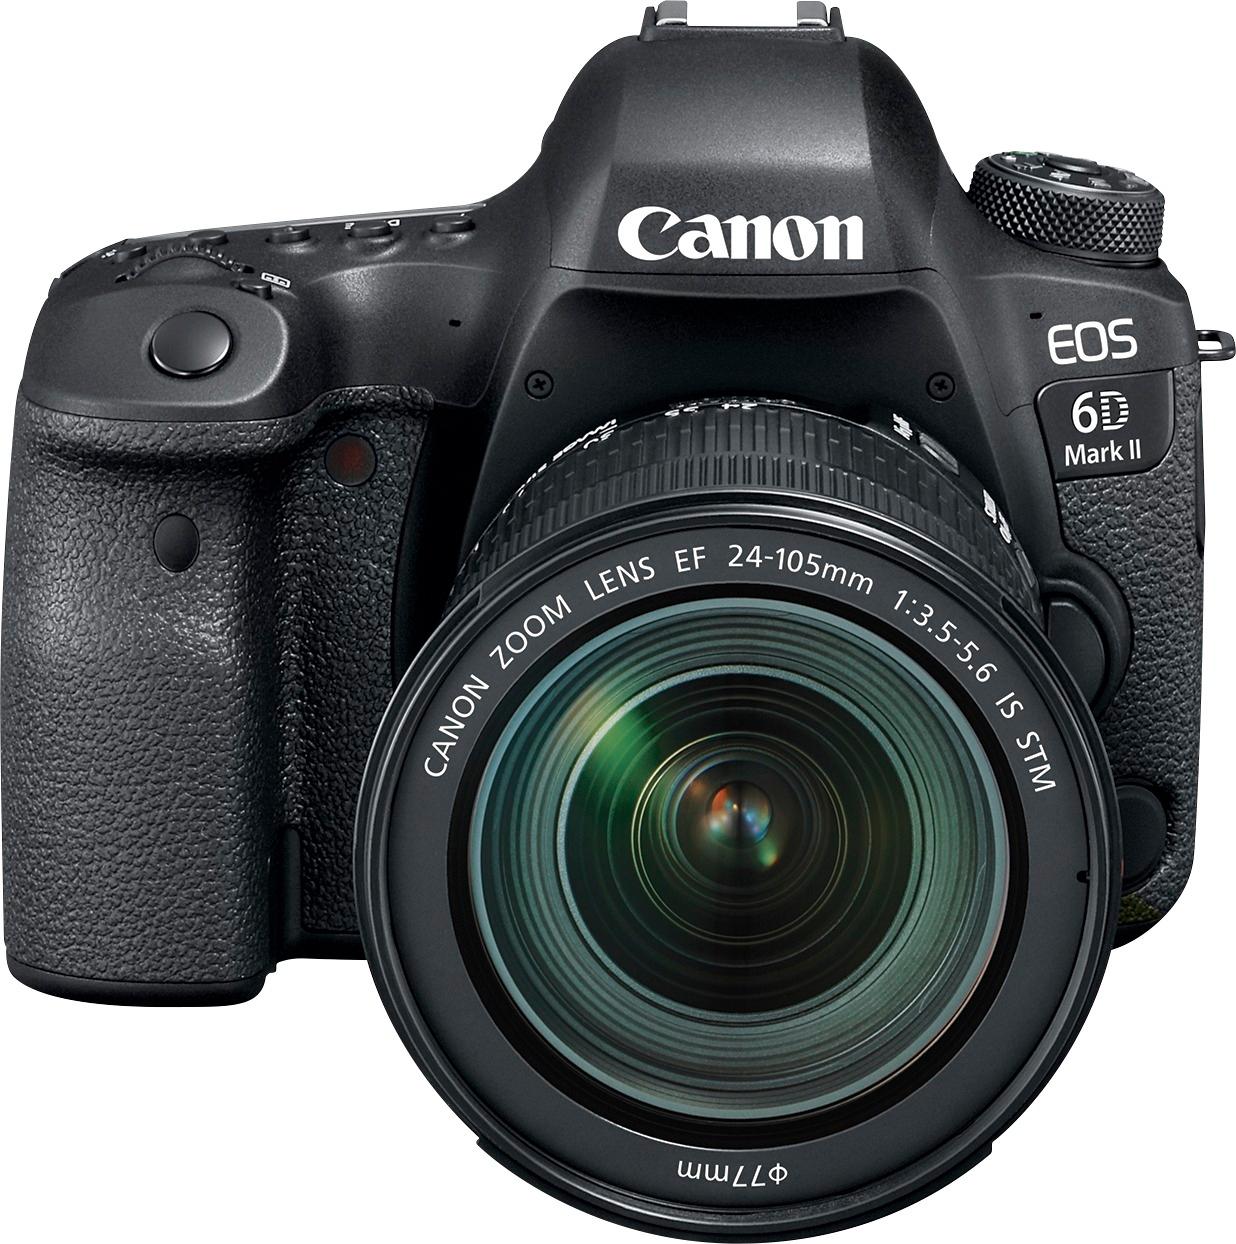 Best Buy: Canon EOS 6D Mark II DSLR Camera with EF 24-105mm f/3.5-5.6 IS STM Lens Black 1897C021